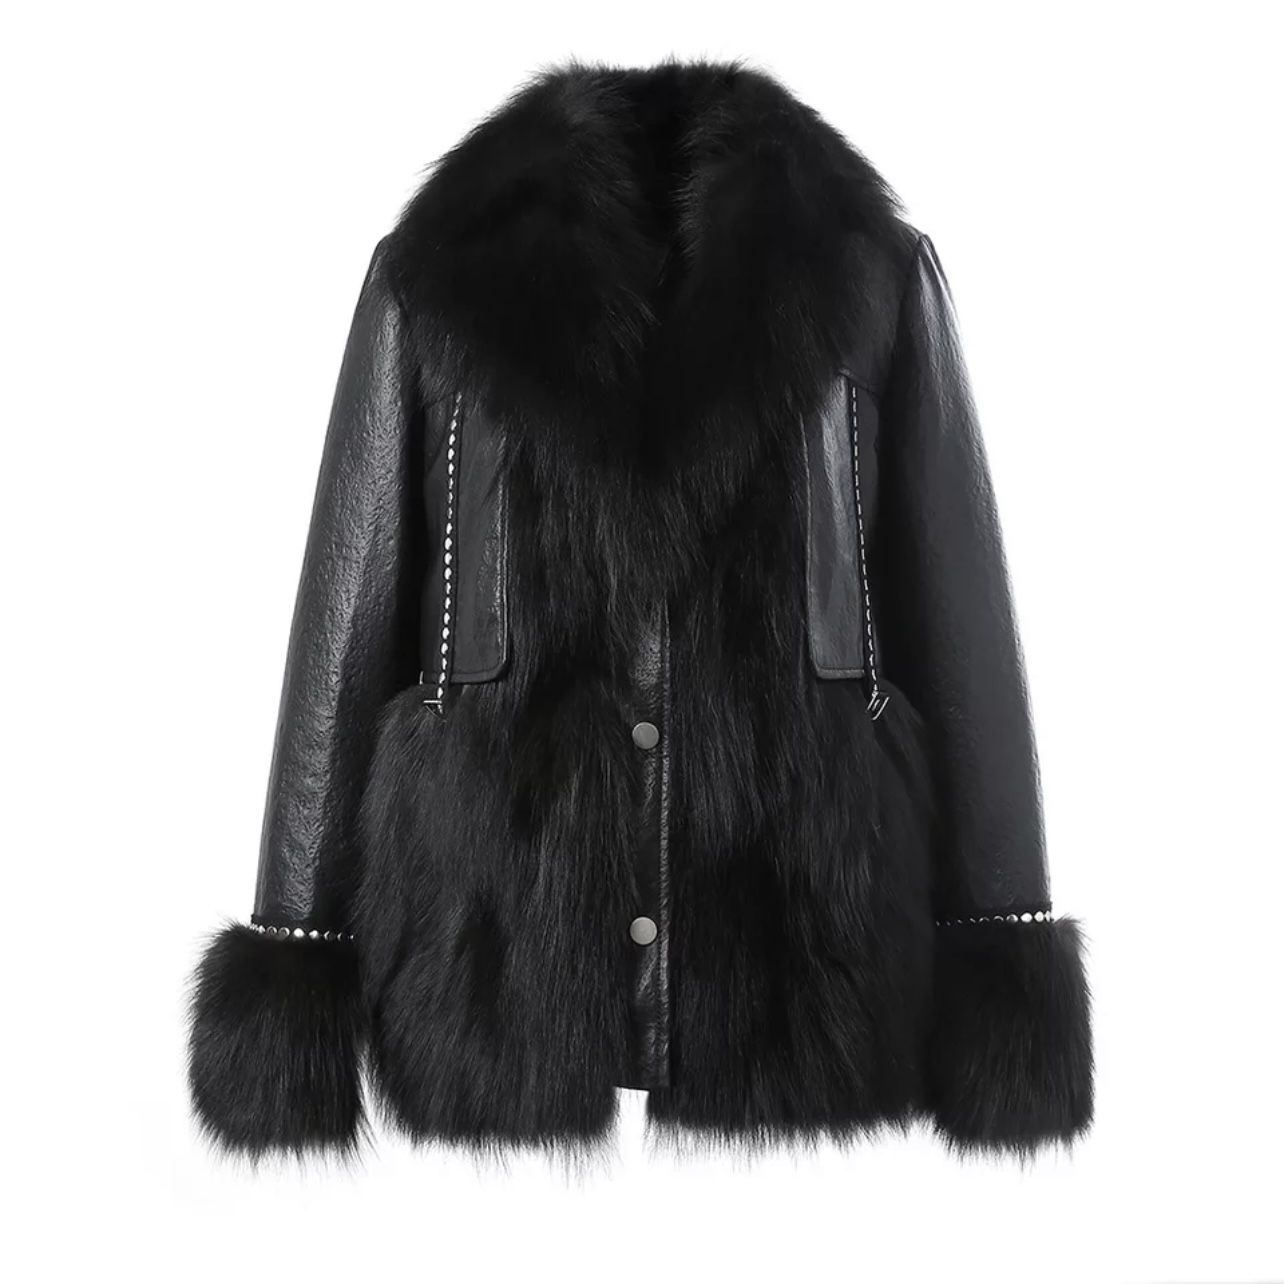 Genuine fox Fur Coat genuine leather jacket vest warm long sleeve trench bomber Jacket Fur Sheepskin Jacket Studs 